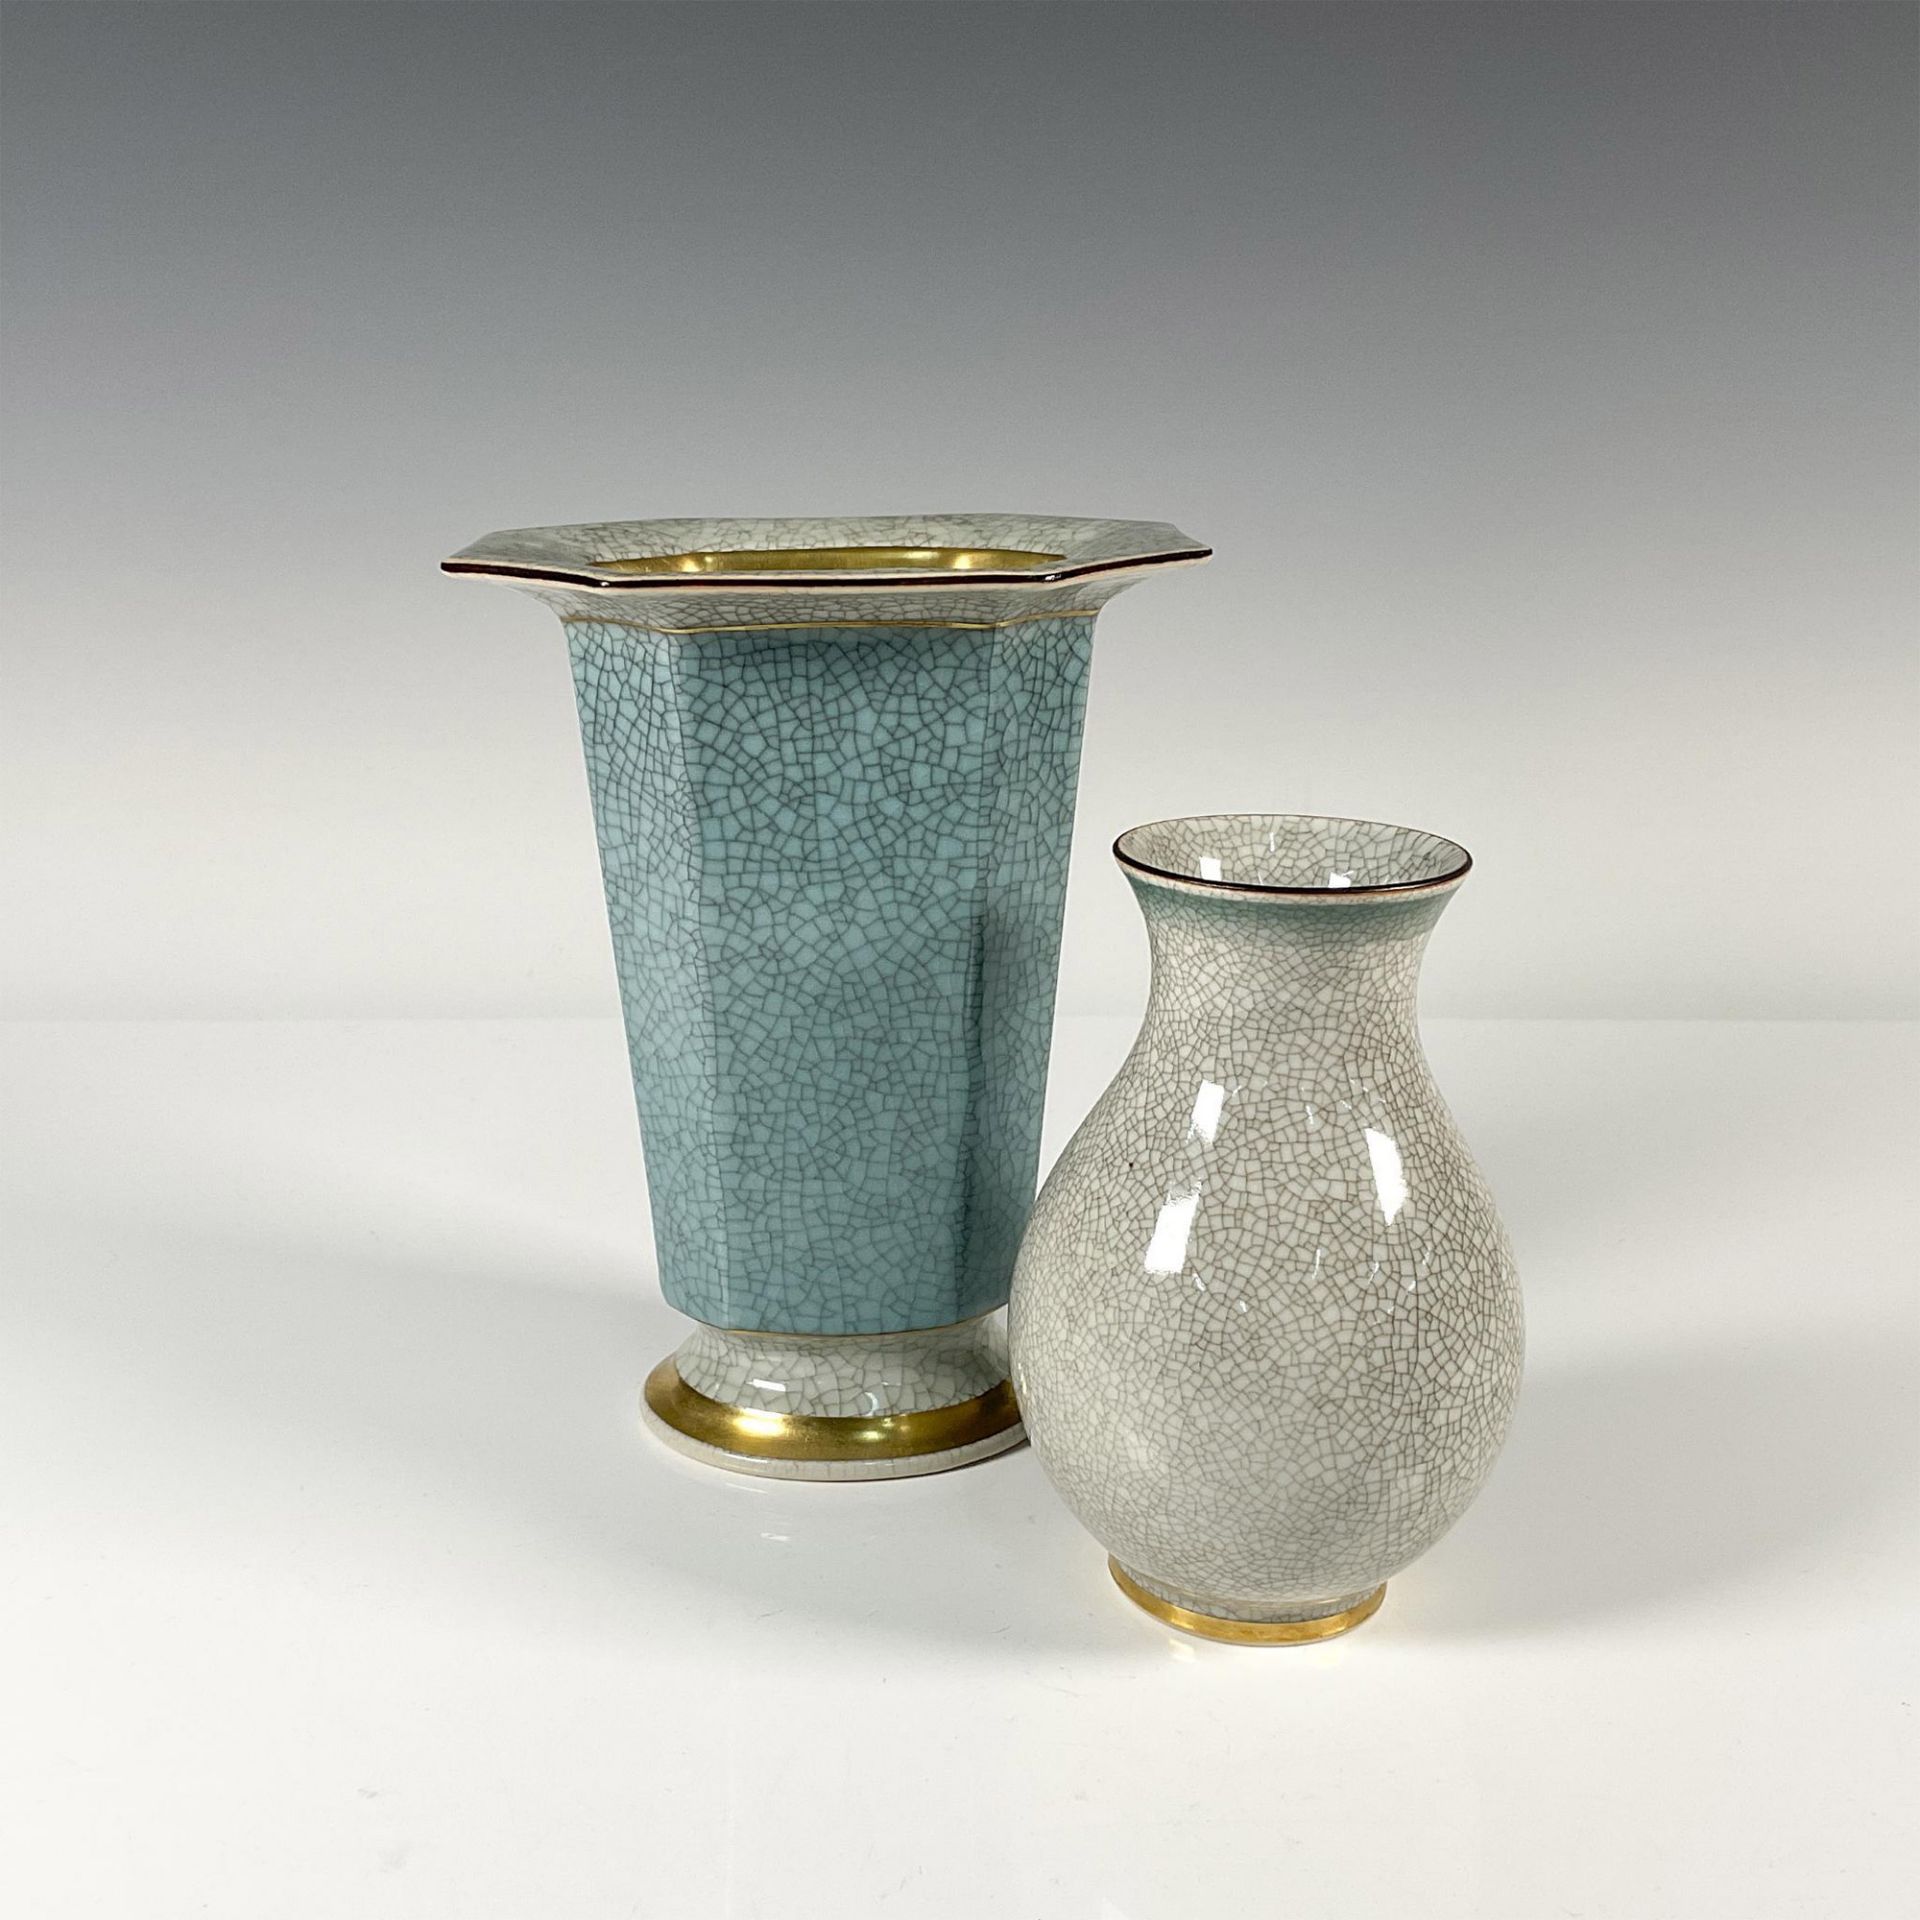 2pc Royal Copenhagen Crackle Glazed Vases - Image 2 of 3